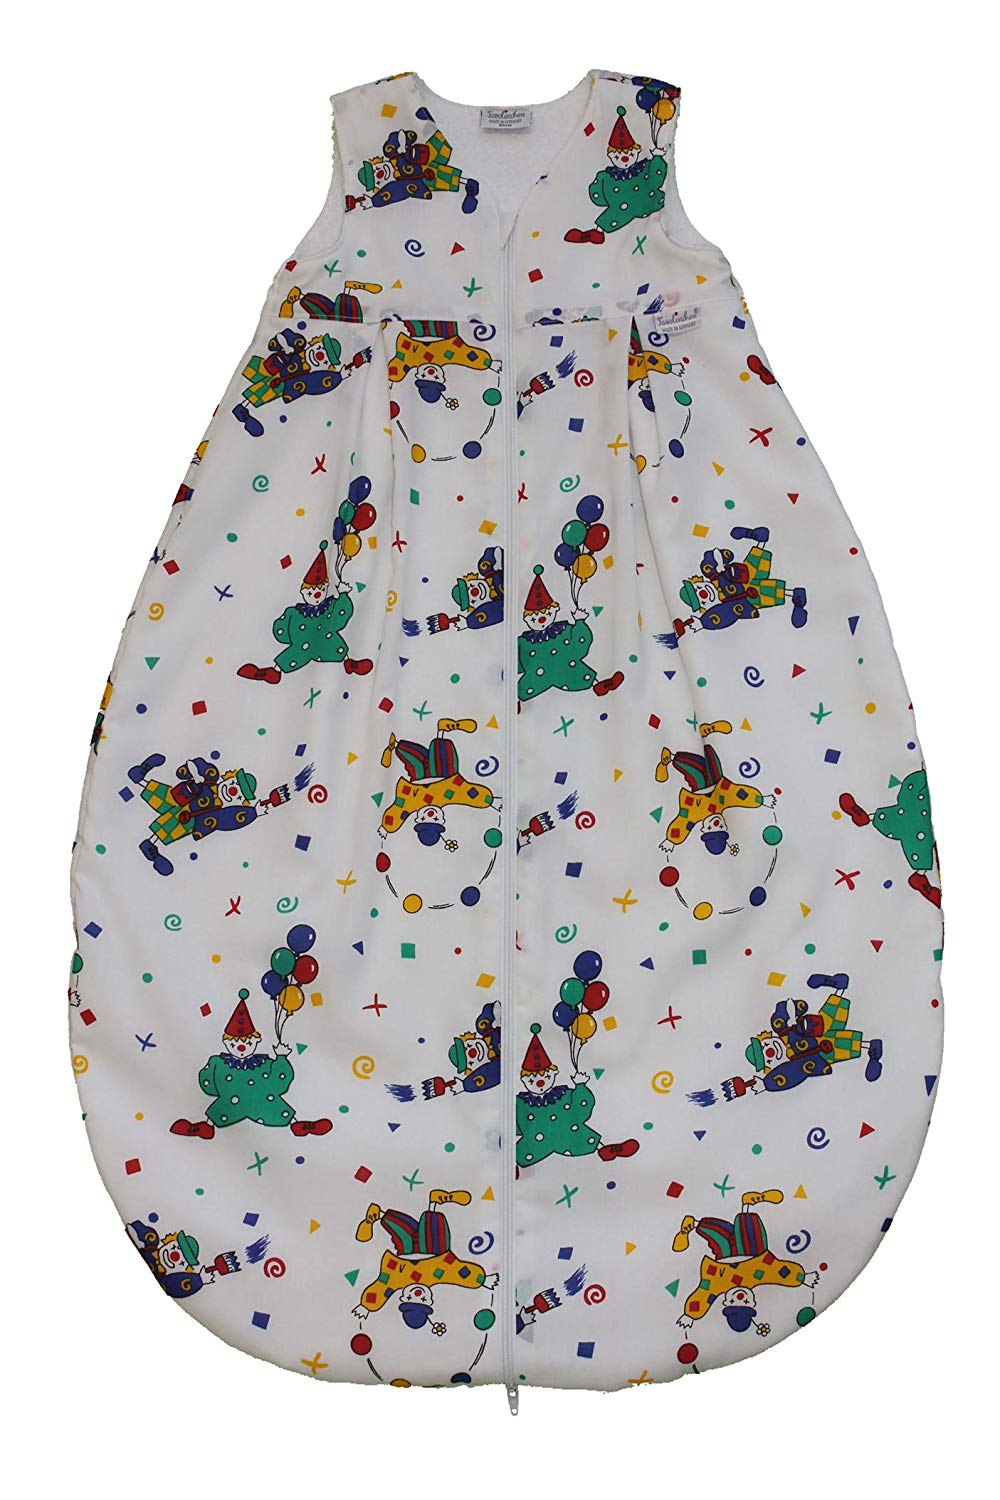 Tavolinchen 35/627 Terry Cloth Clown Sleeping Bag 110 cm 110 cm original